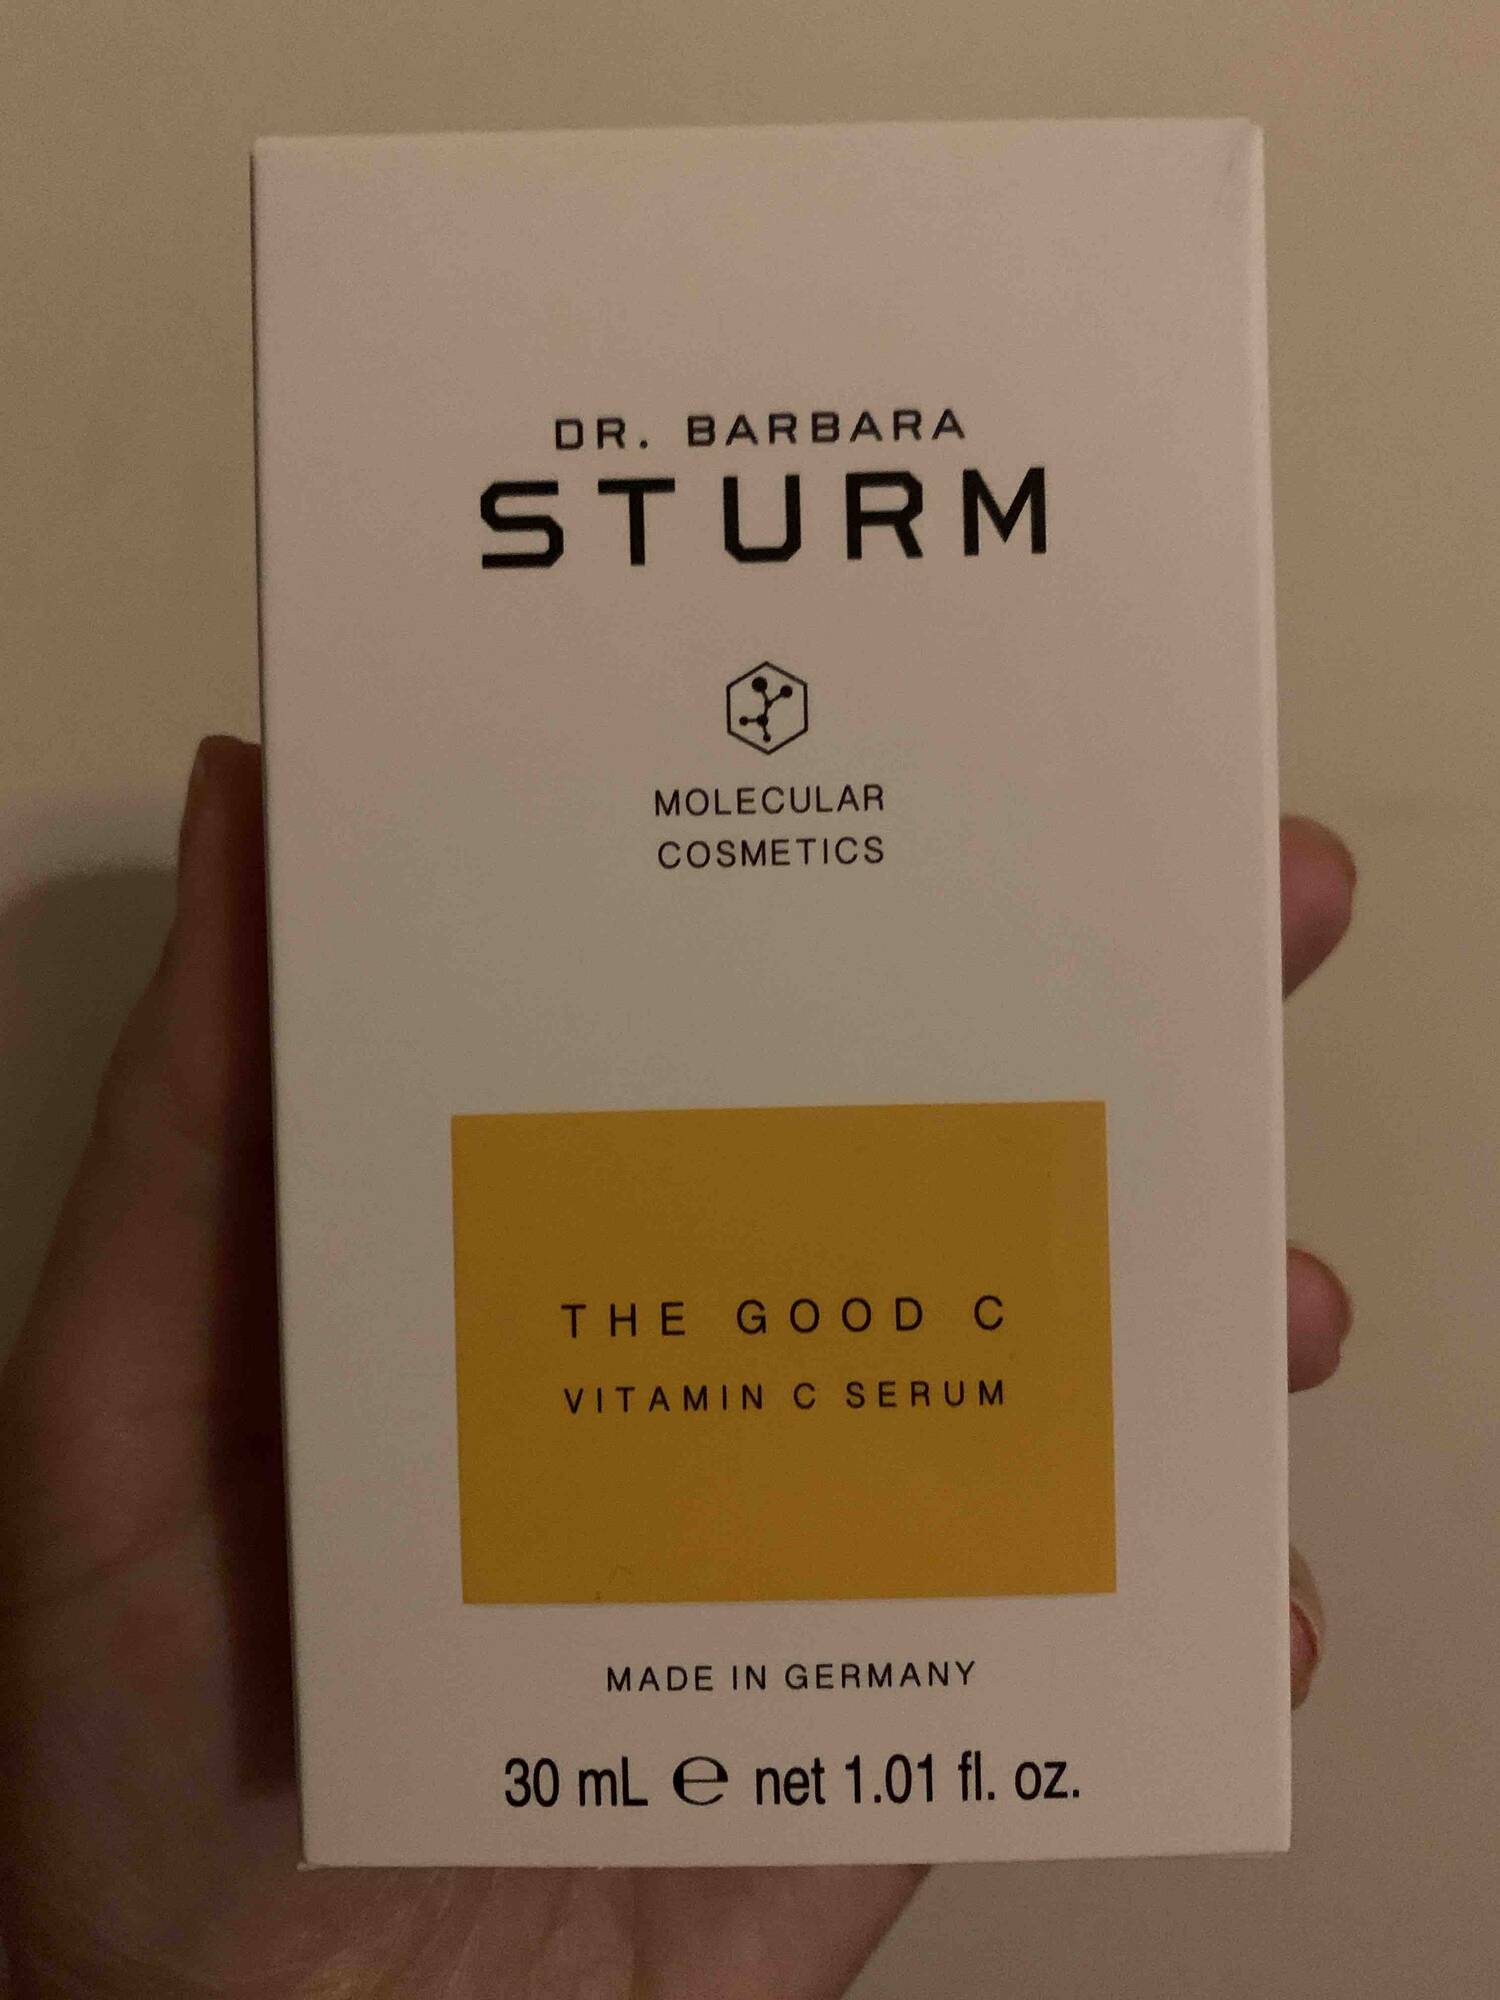 DR BARBARA STURM - The good C - Vitamin C serum